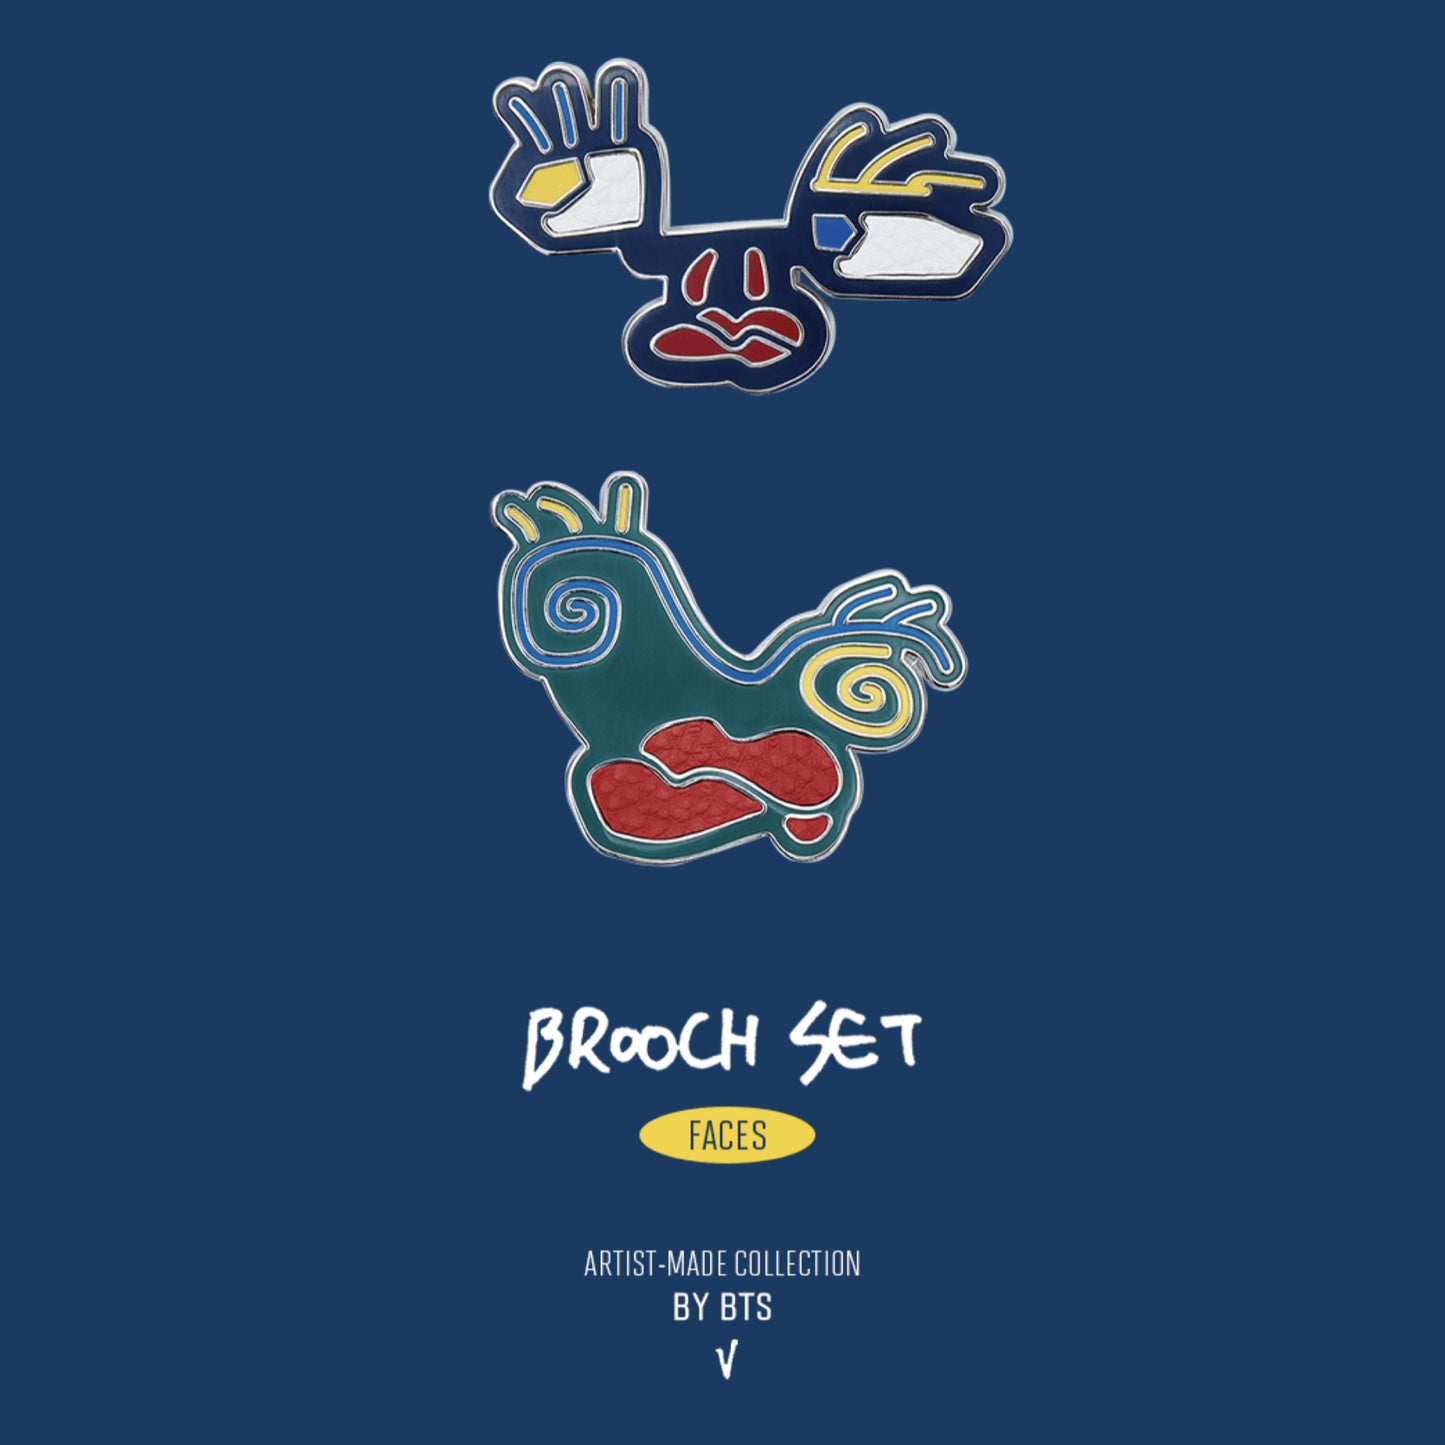 BTS | ARTIST-MADE COLLECTION BY BTS | V - BROOCH SET (FACES)